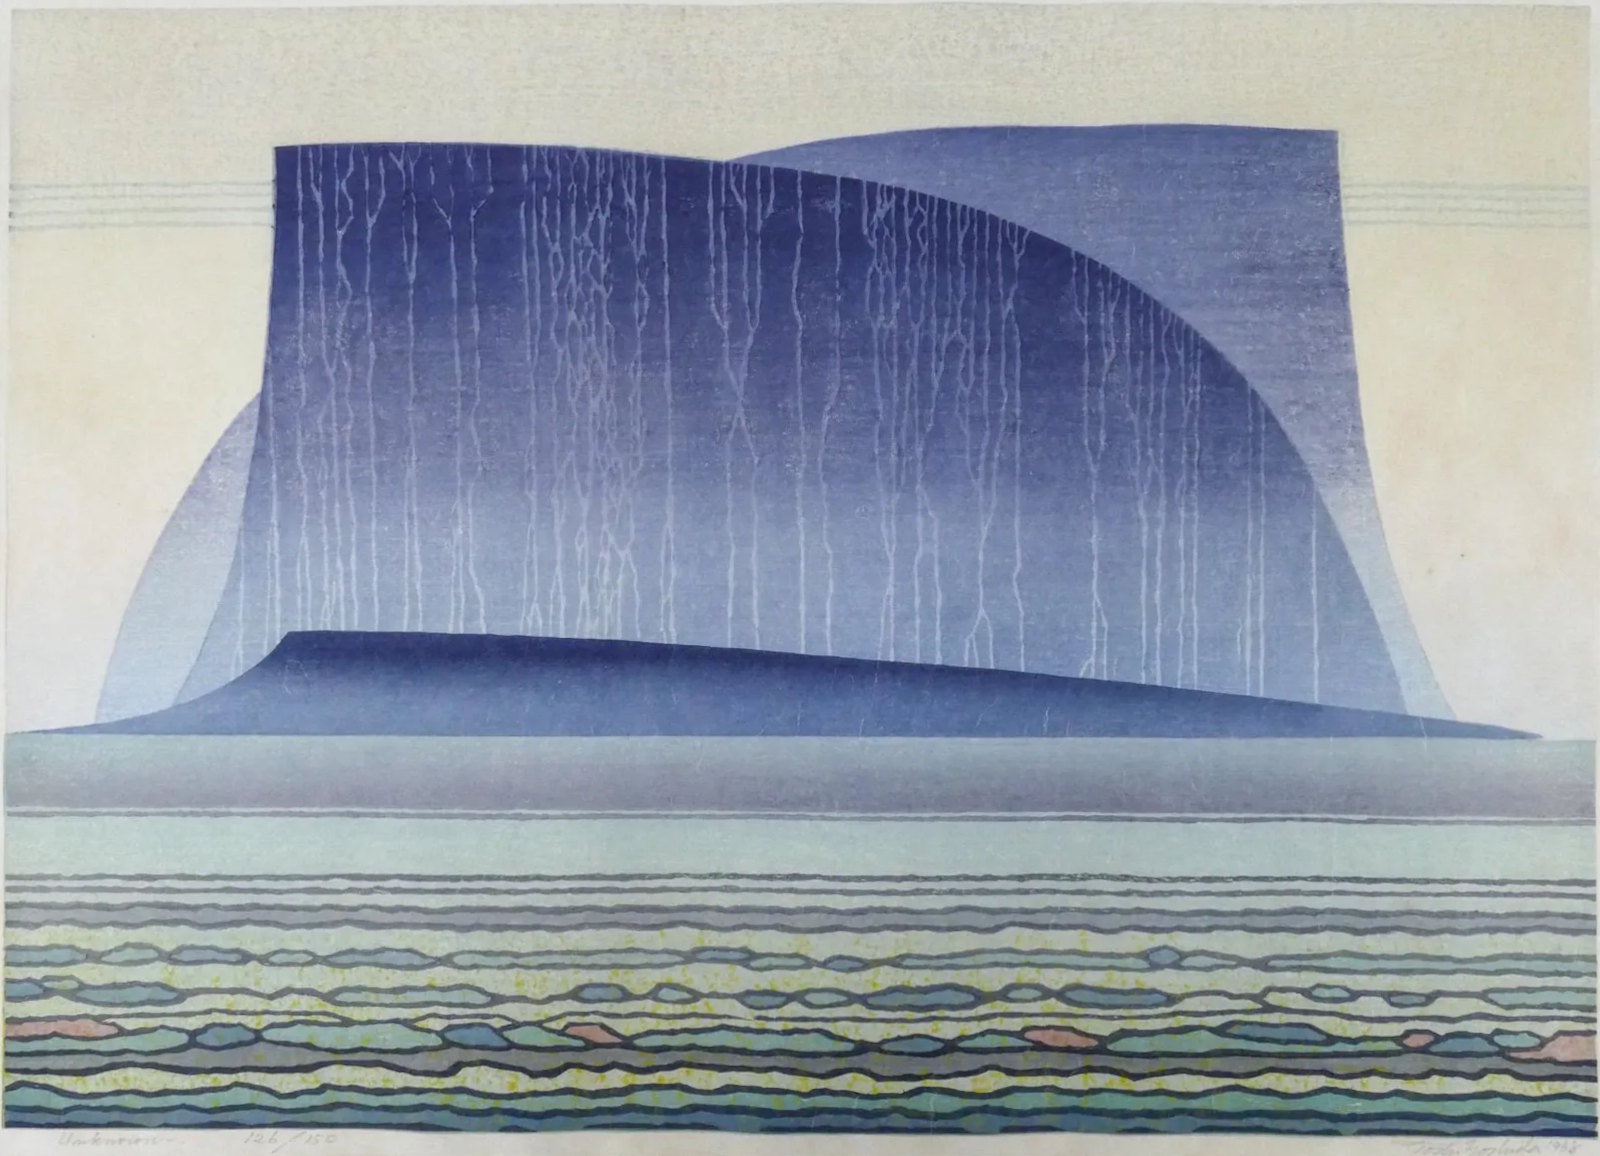 Toshi Yoshida “Unknown” 1968 woodblock print